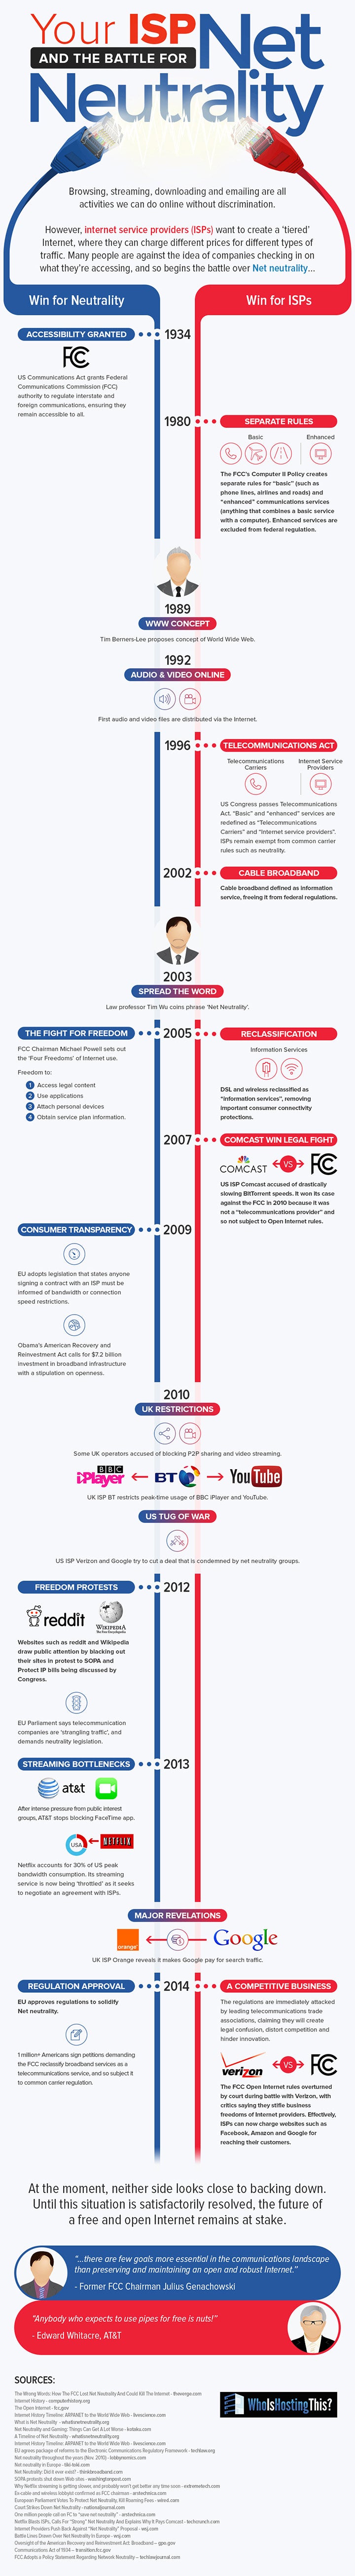 A Timeline of Net Neutrality